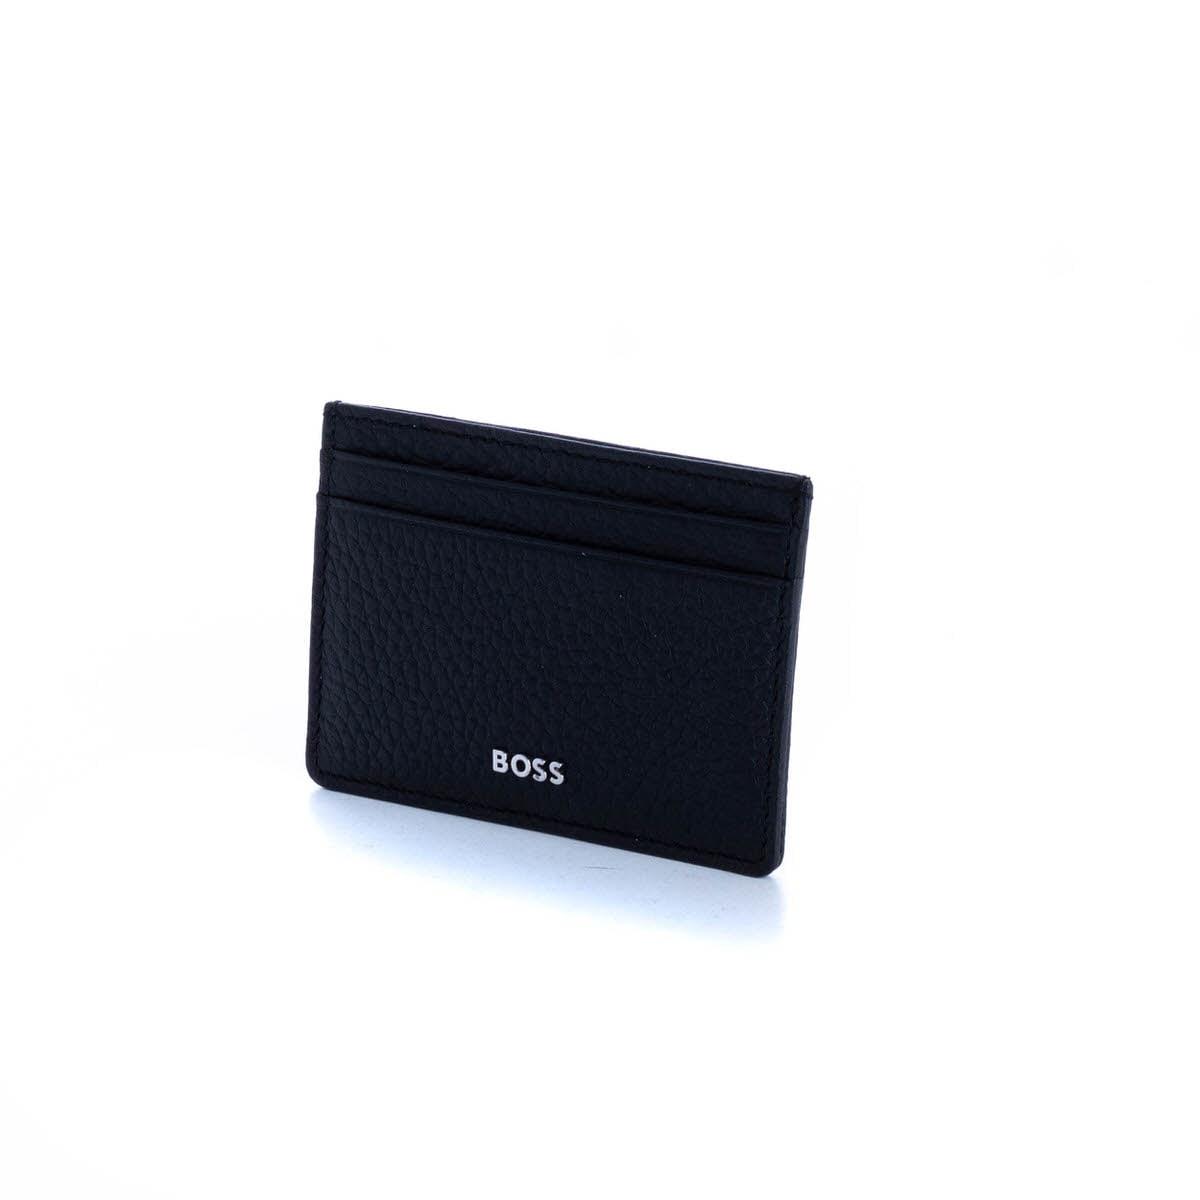 BOSS by HUGO BOSS Boss Leather Wallet Crosstown Money Clip in Black for Men  - Save 8% | Lyst